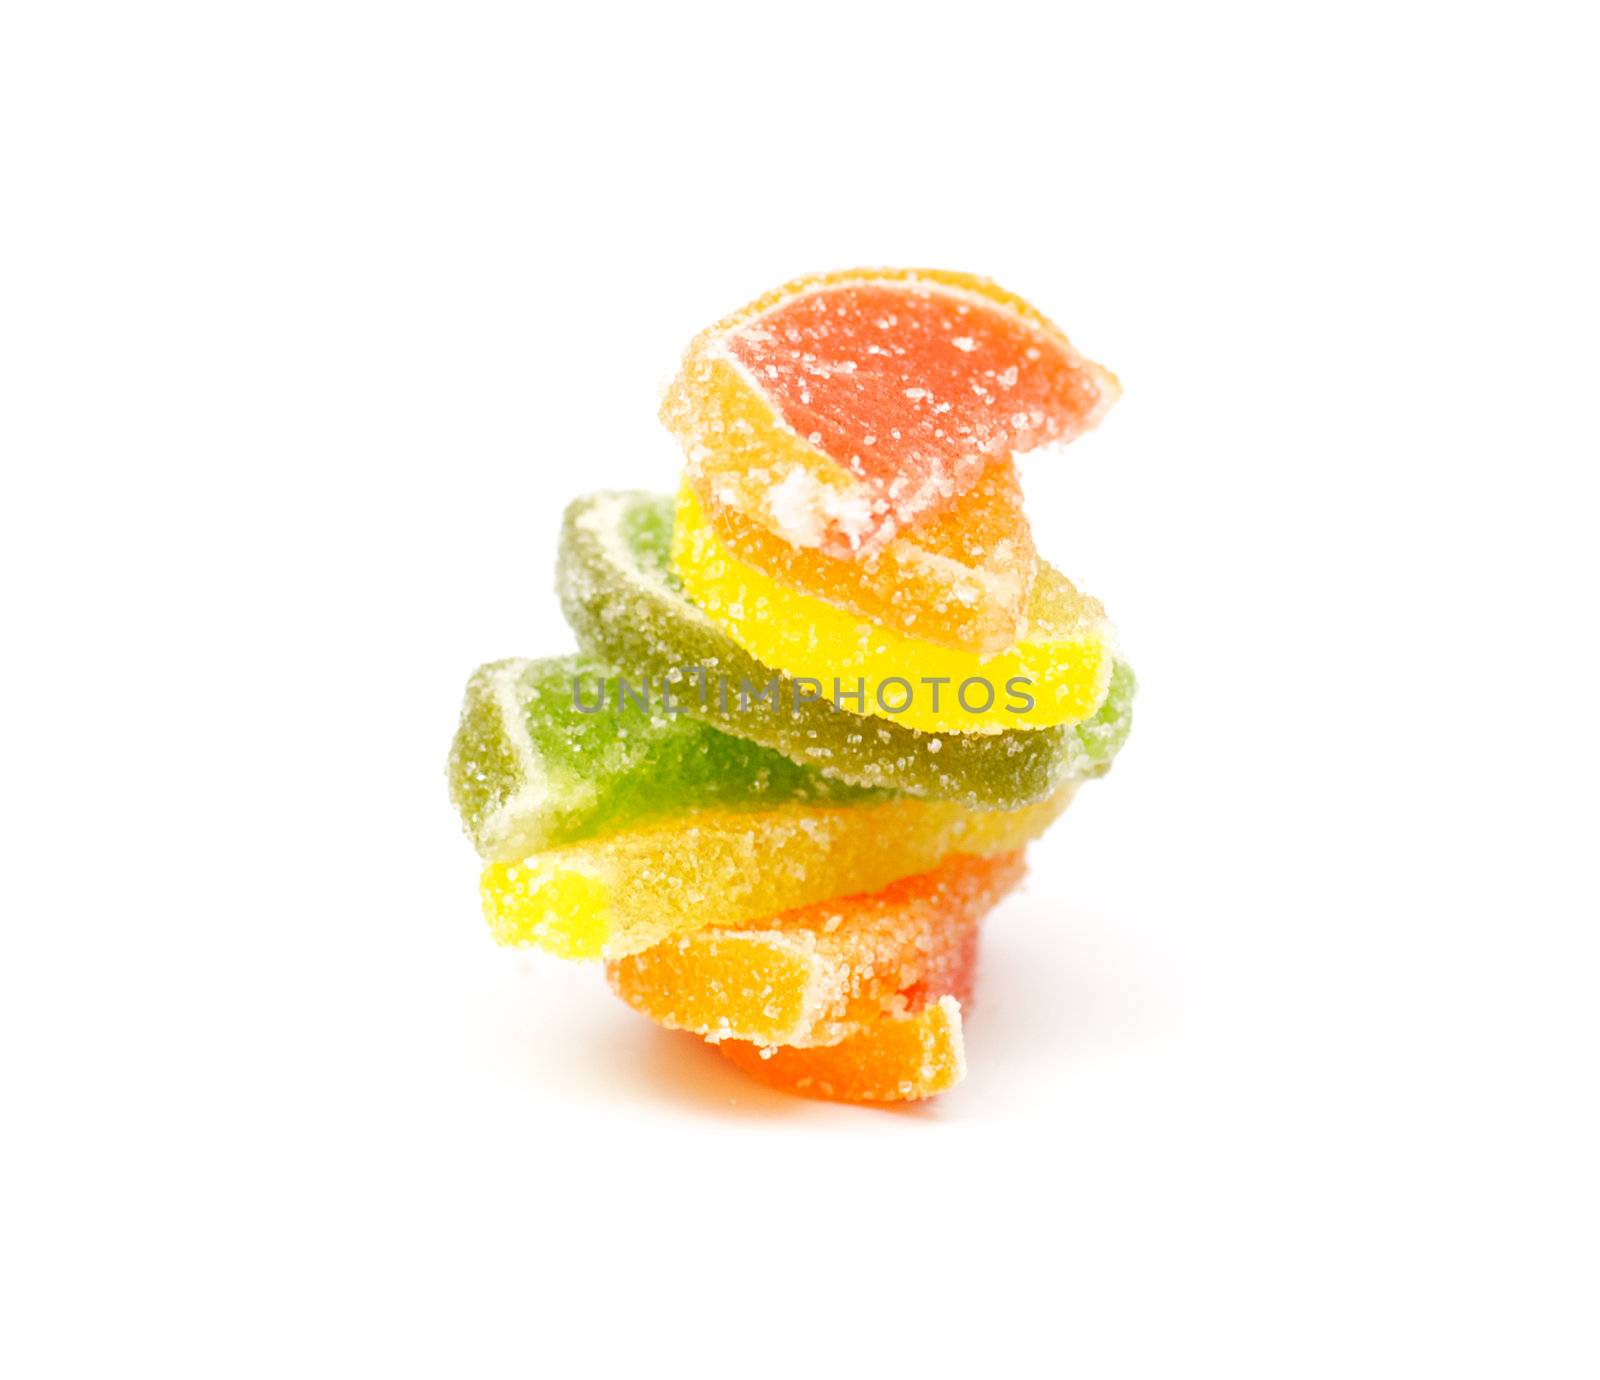 Fruit jelly candy by zhekos